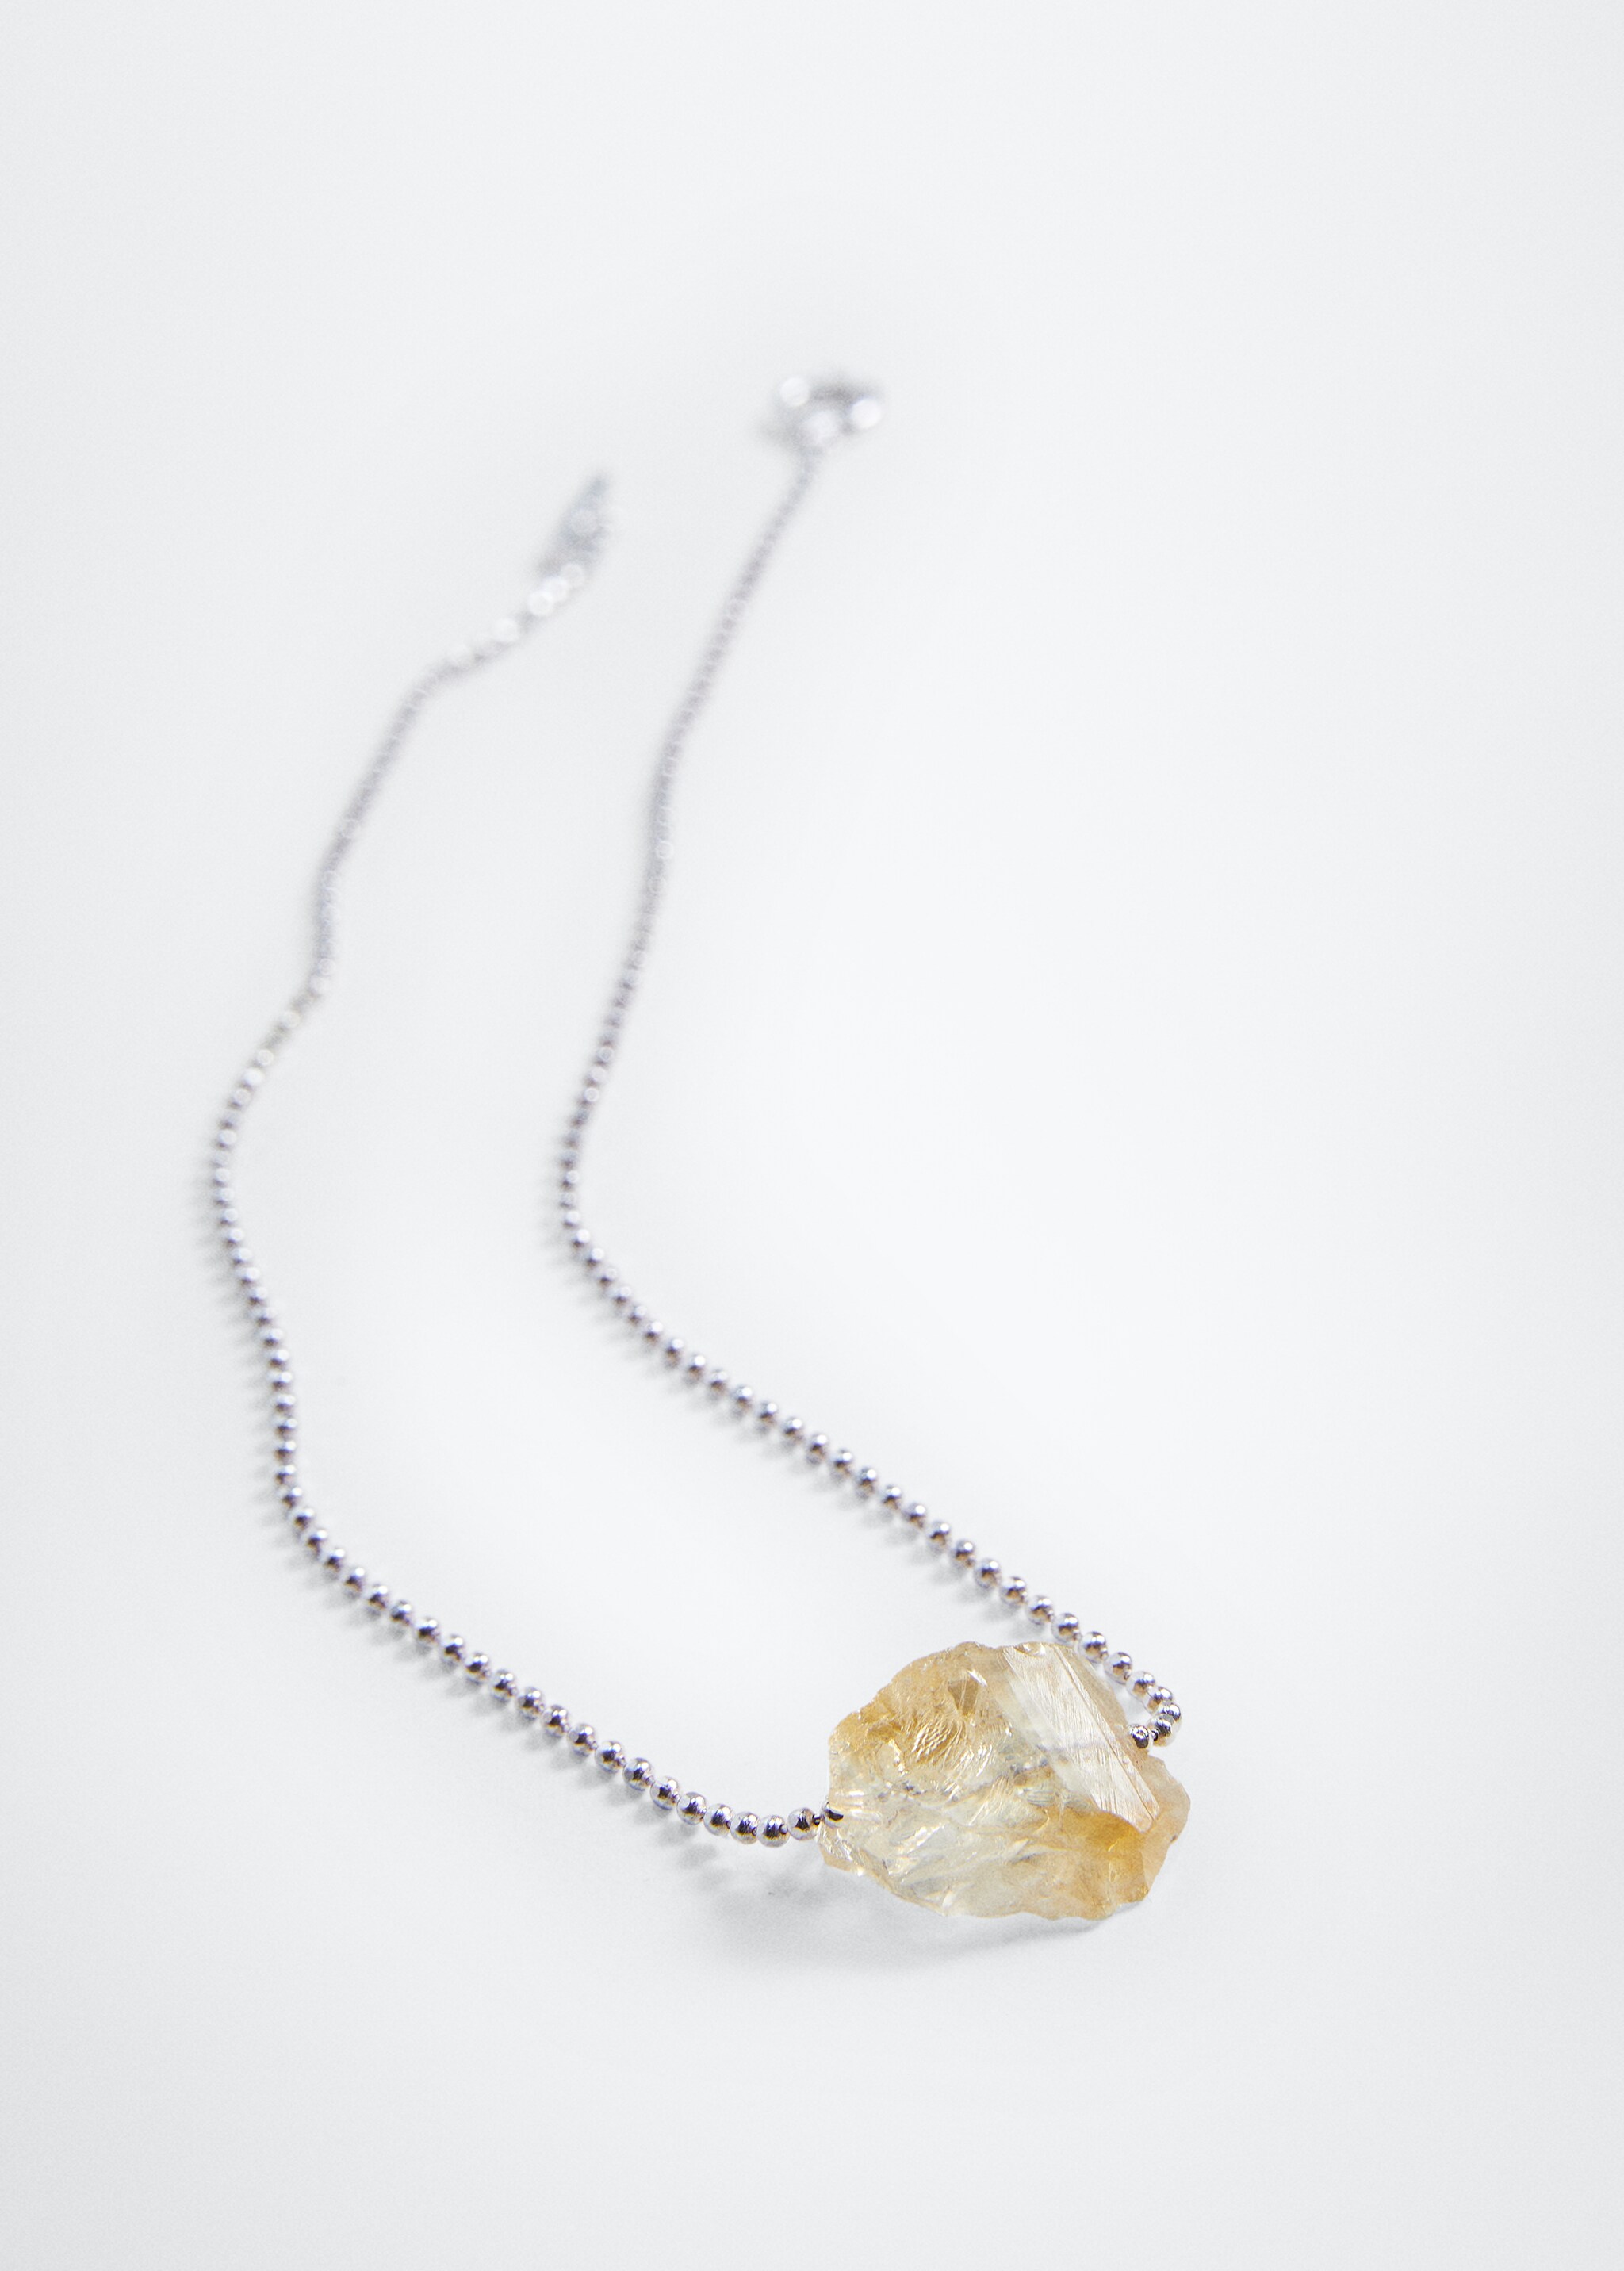 Stone pendant necklace - Medium plane